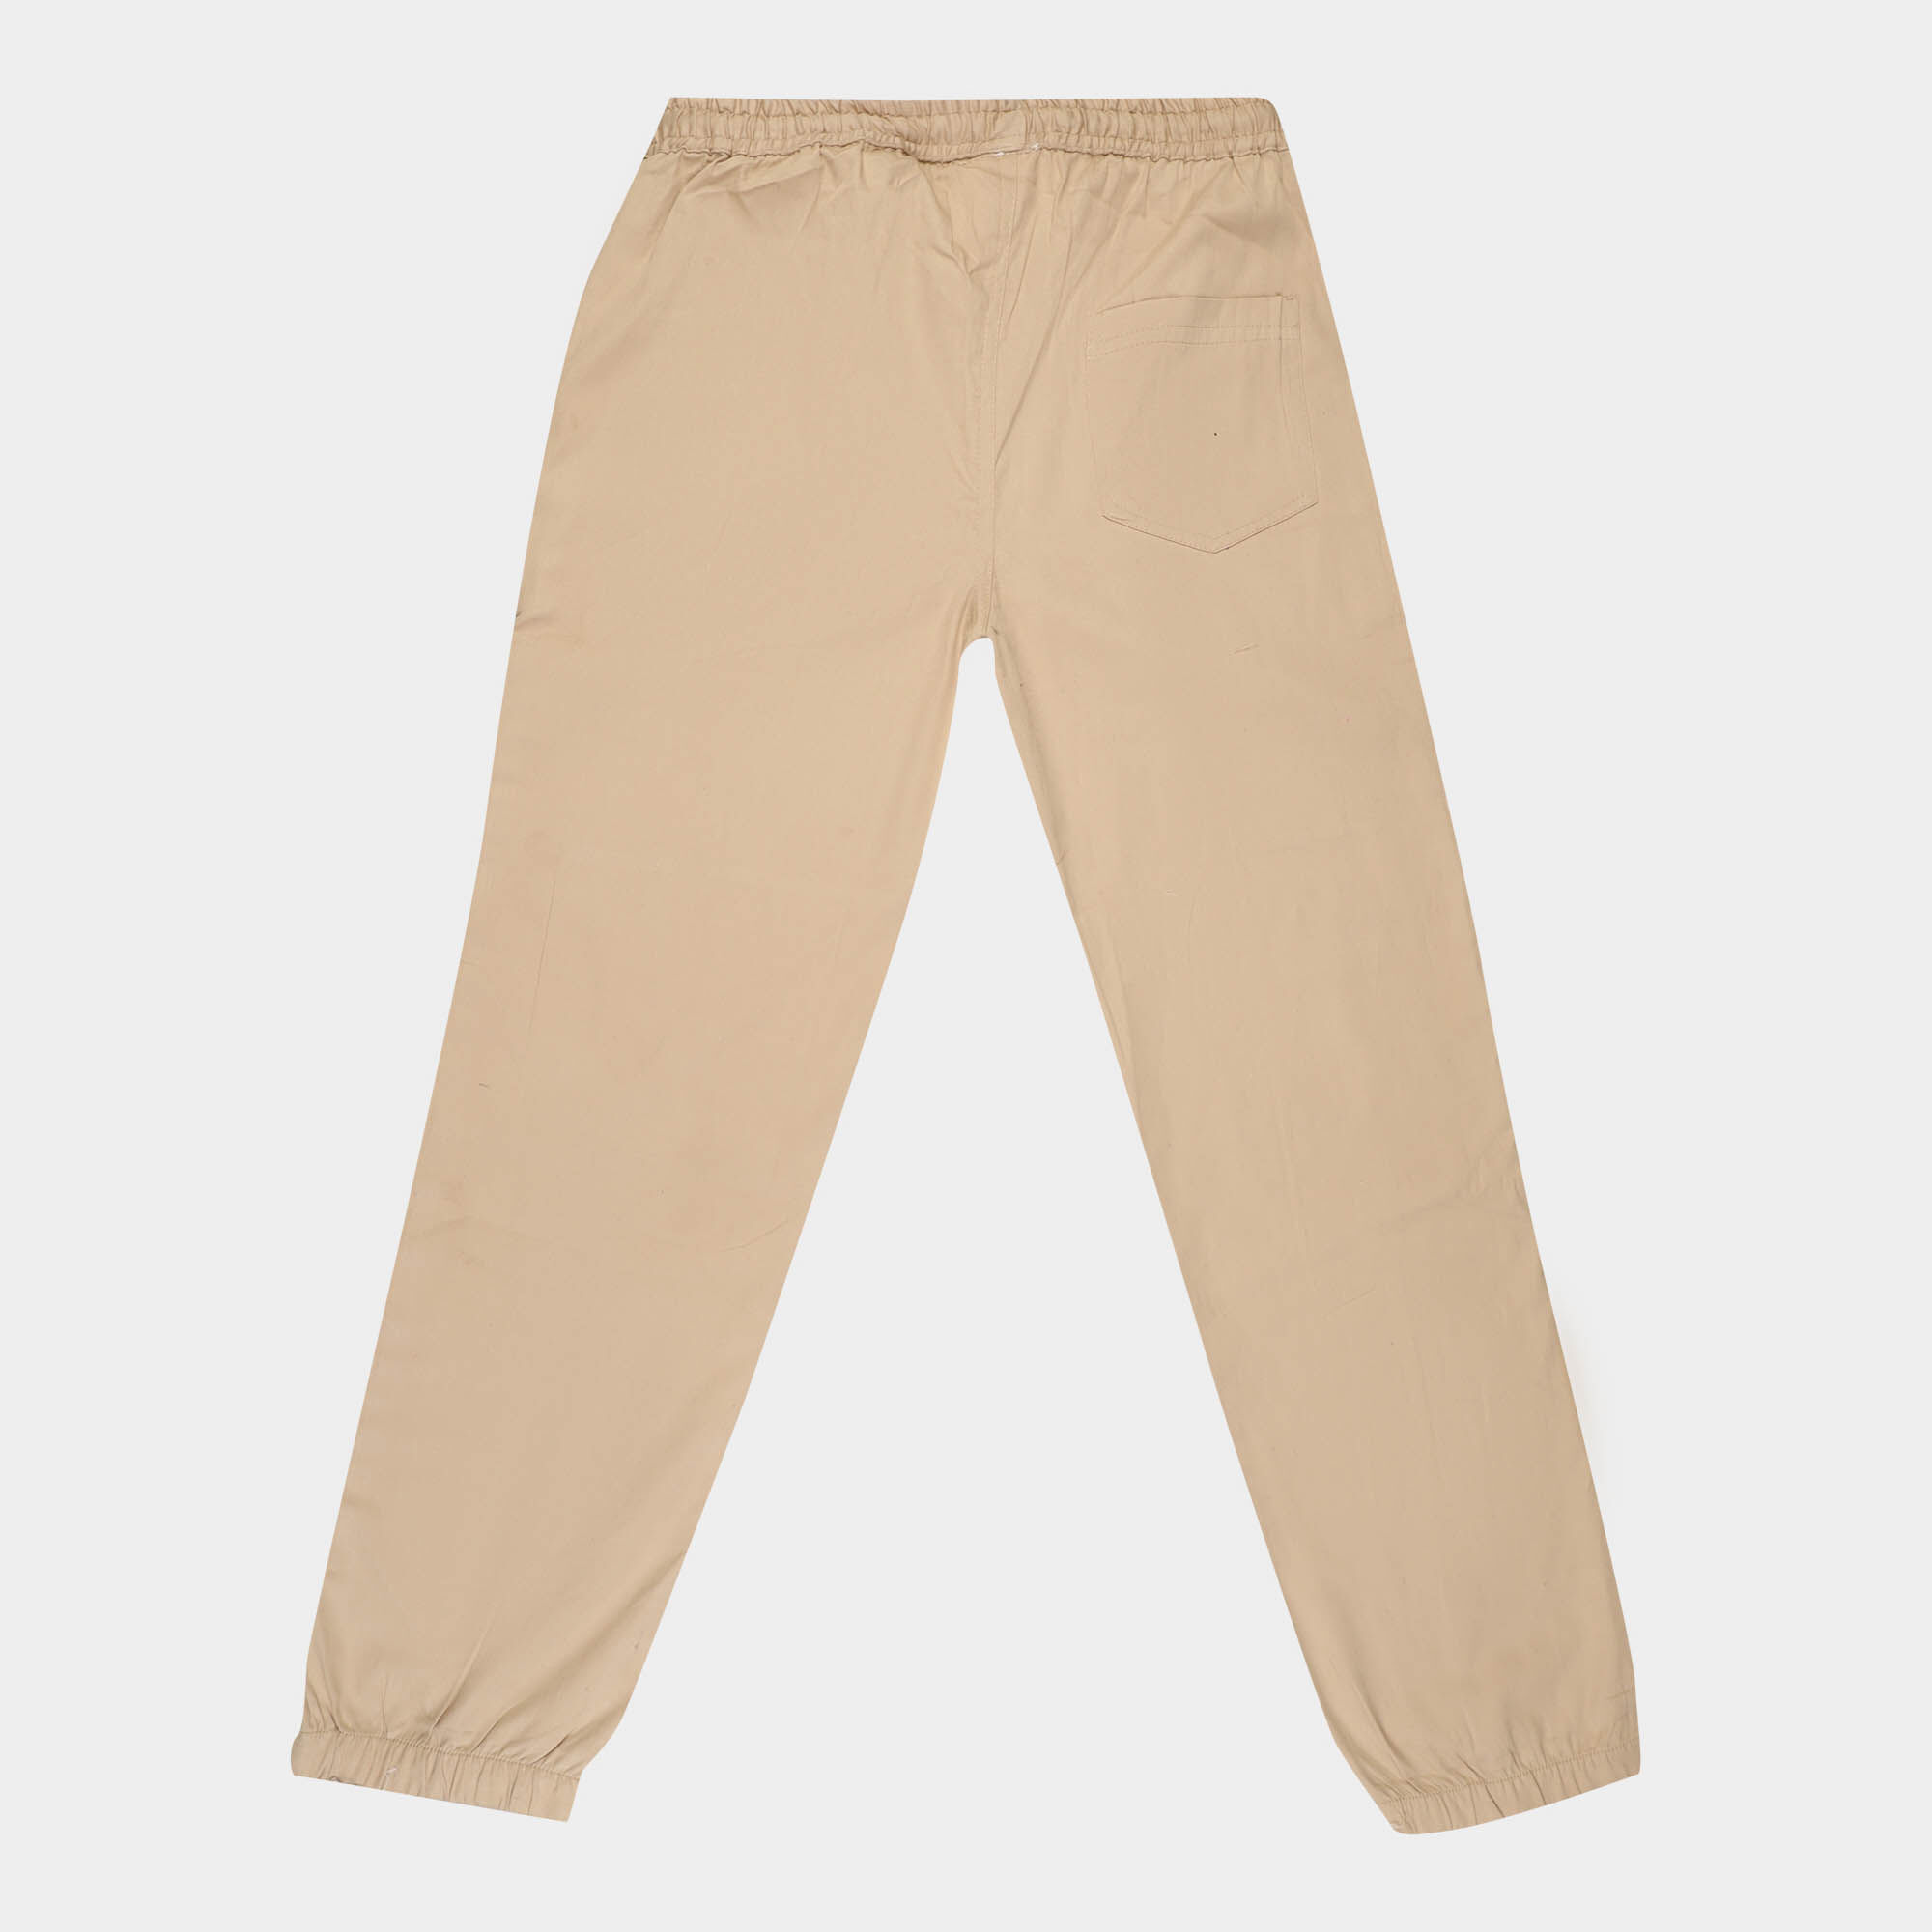 HAPIMO Men's Cotton Linen Cargo Jogger Cuff Pants Summer Discount Elastic  Waist Drawstring Solid Trousers for Boys Casual Workout Fashion Comfy Sale  Brown XXXL - Walmart.com